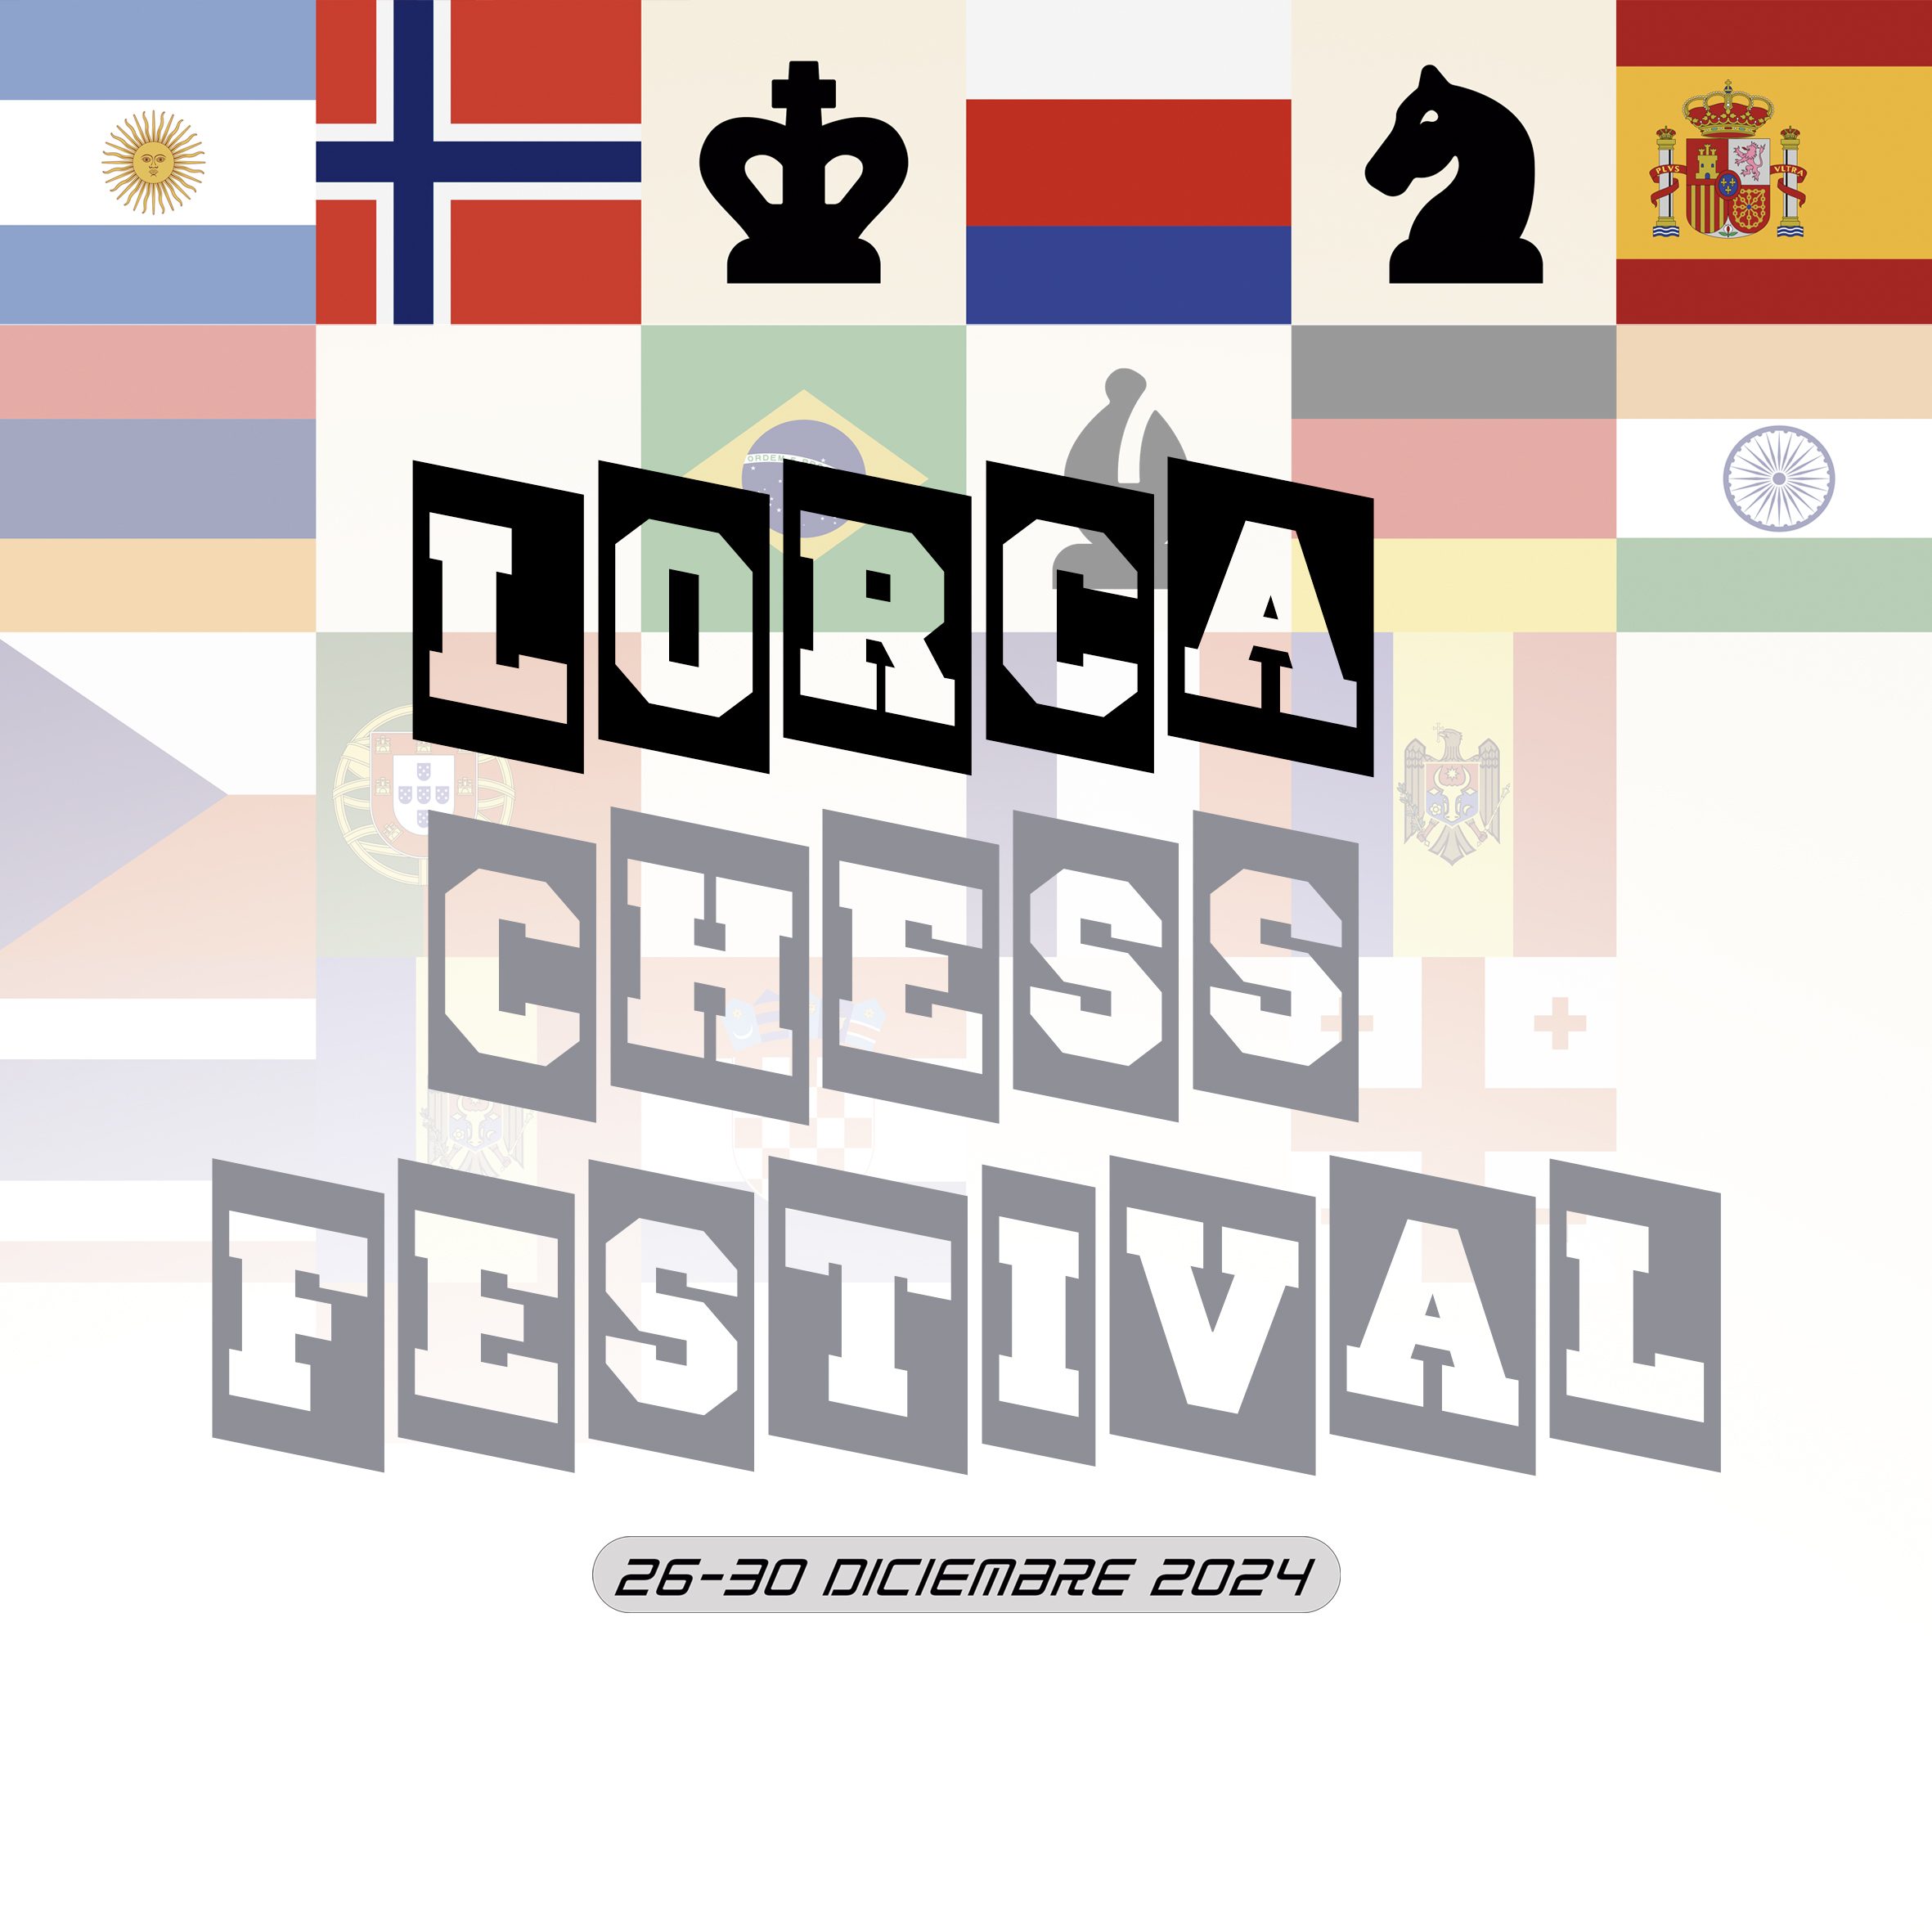 Festival Internacional de Ajedrez Ciudad de Lorca